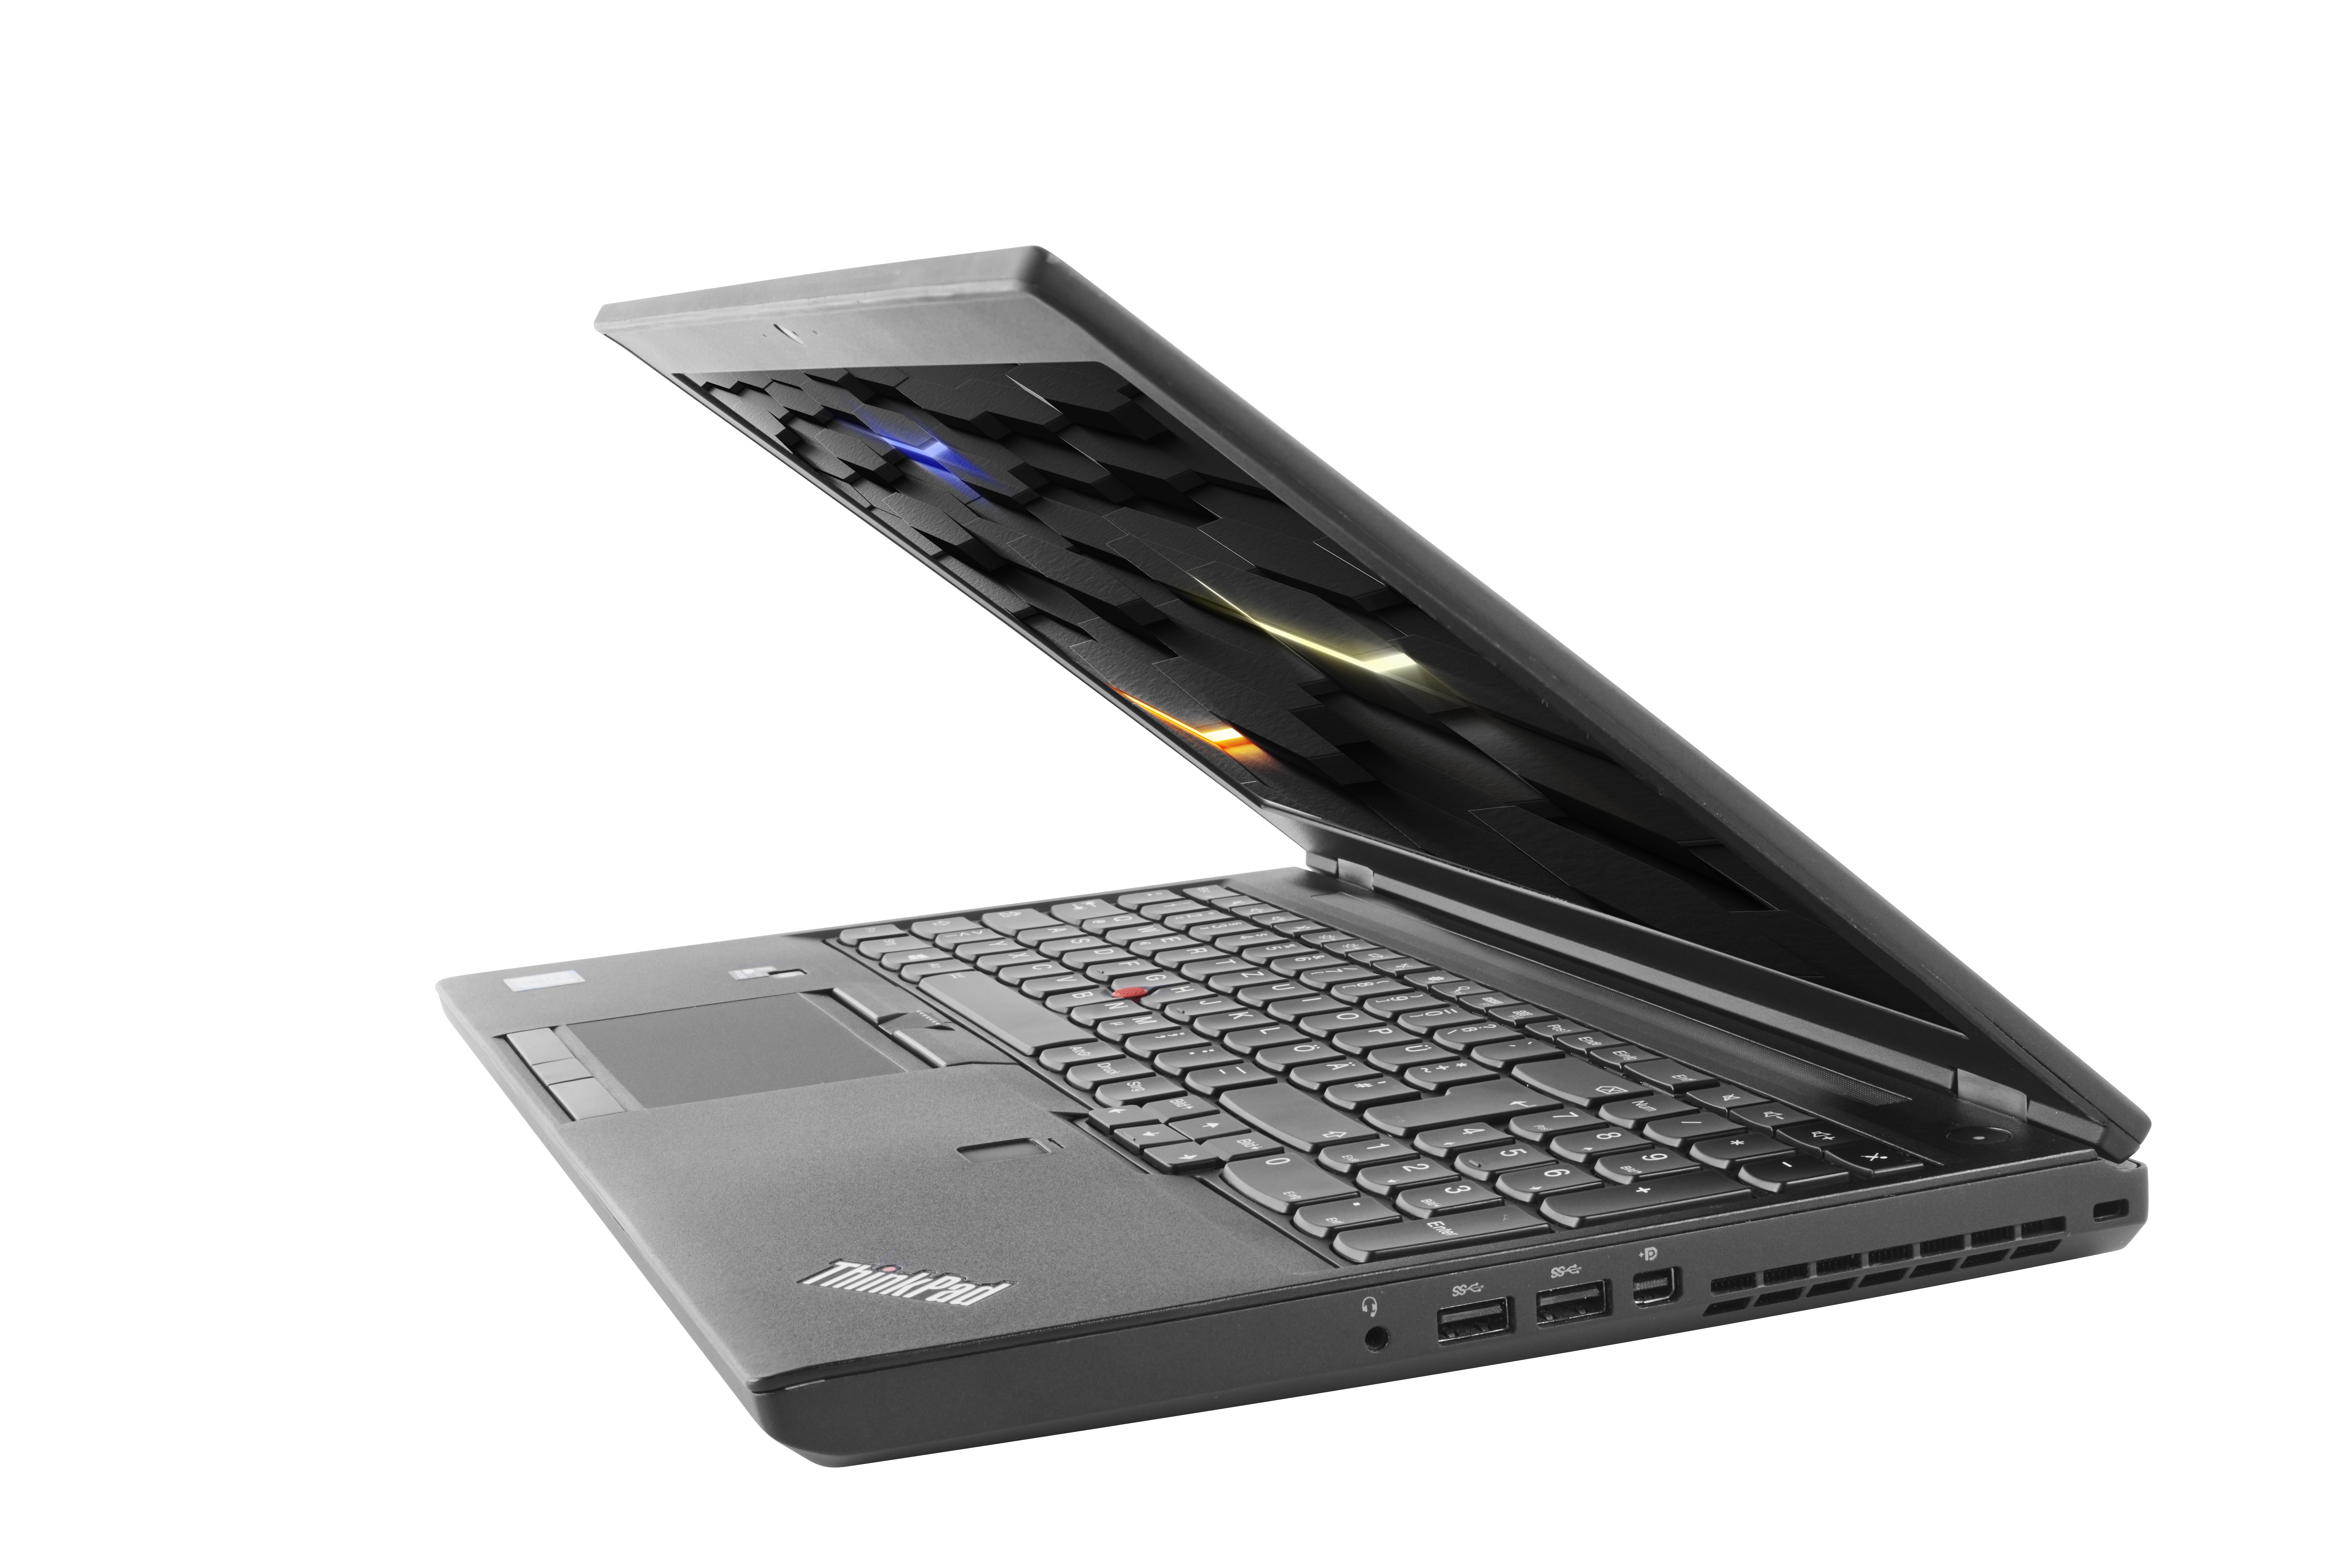 Lenovo ThinkPad P50, i7, 15.6" Full-HD IPS, 8GB, 250GB SSD + 1TB HDD, Webcam, Windows 10 Pro